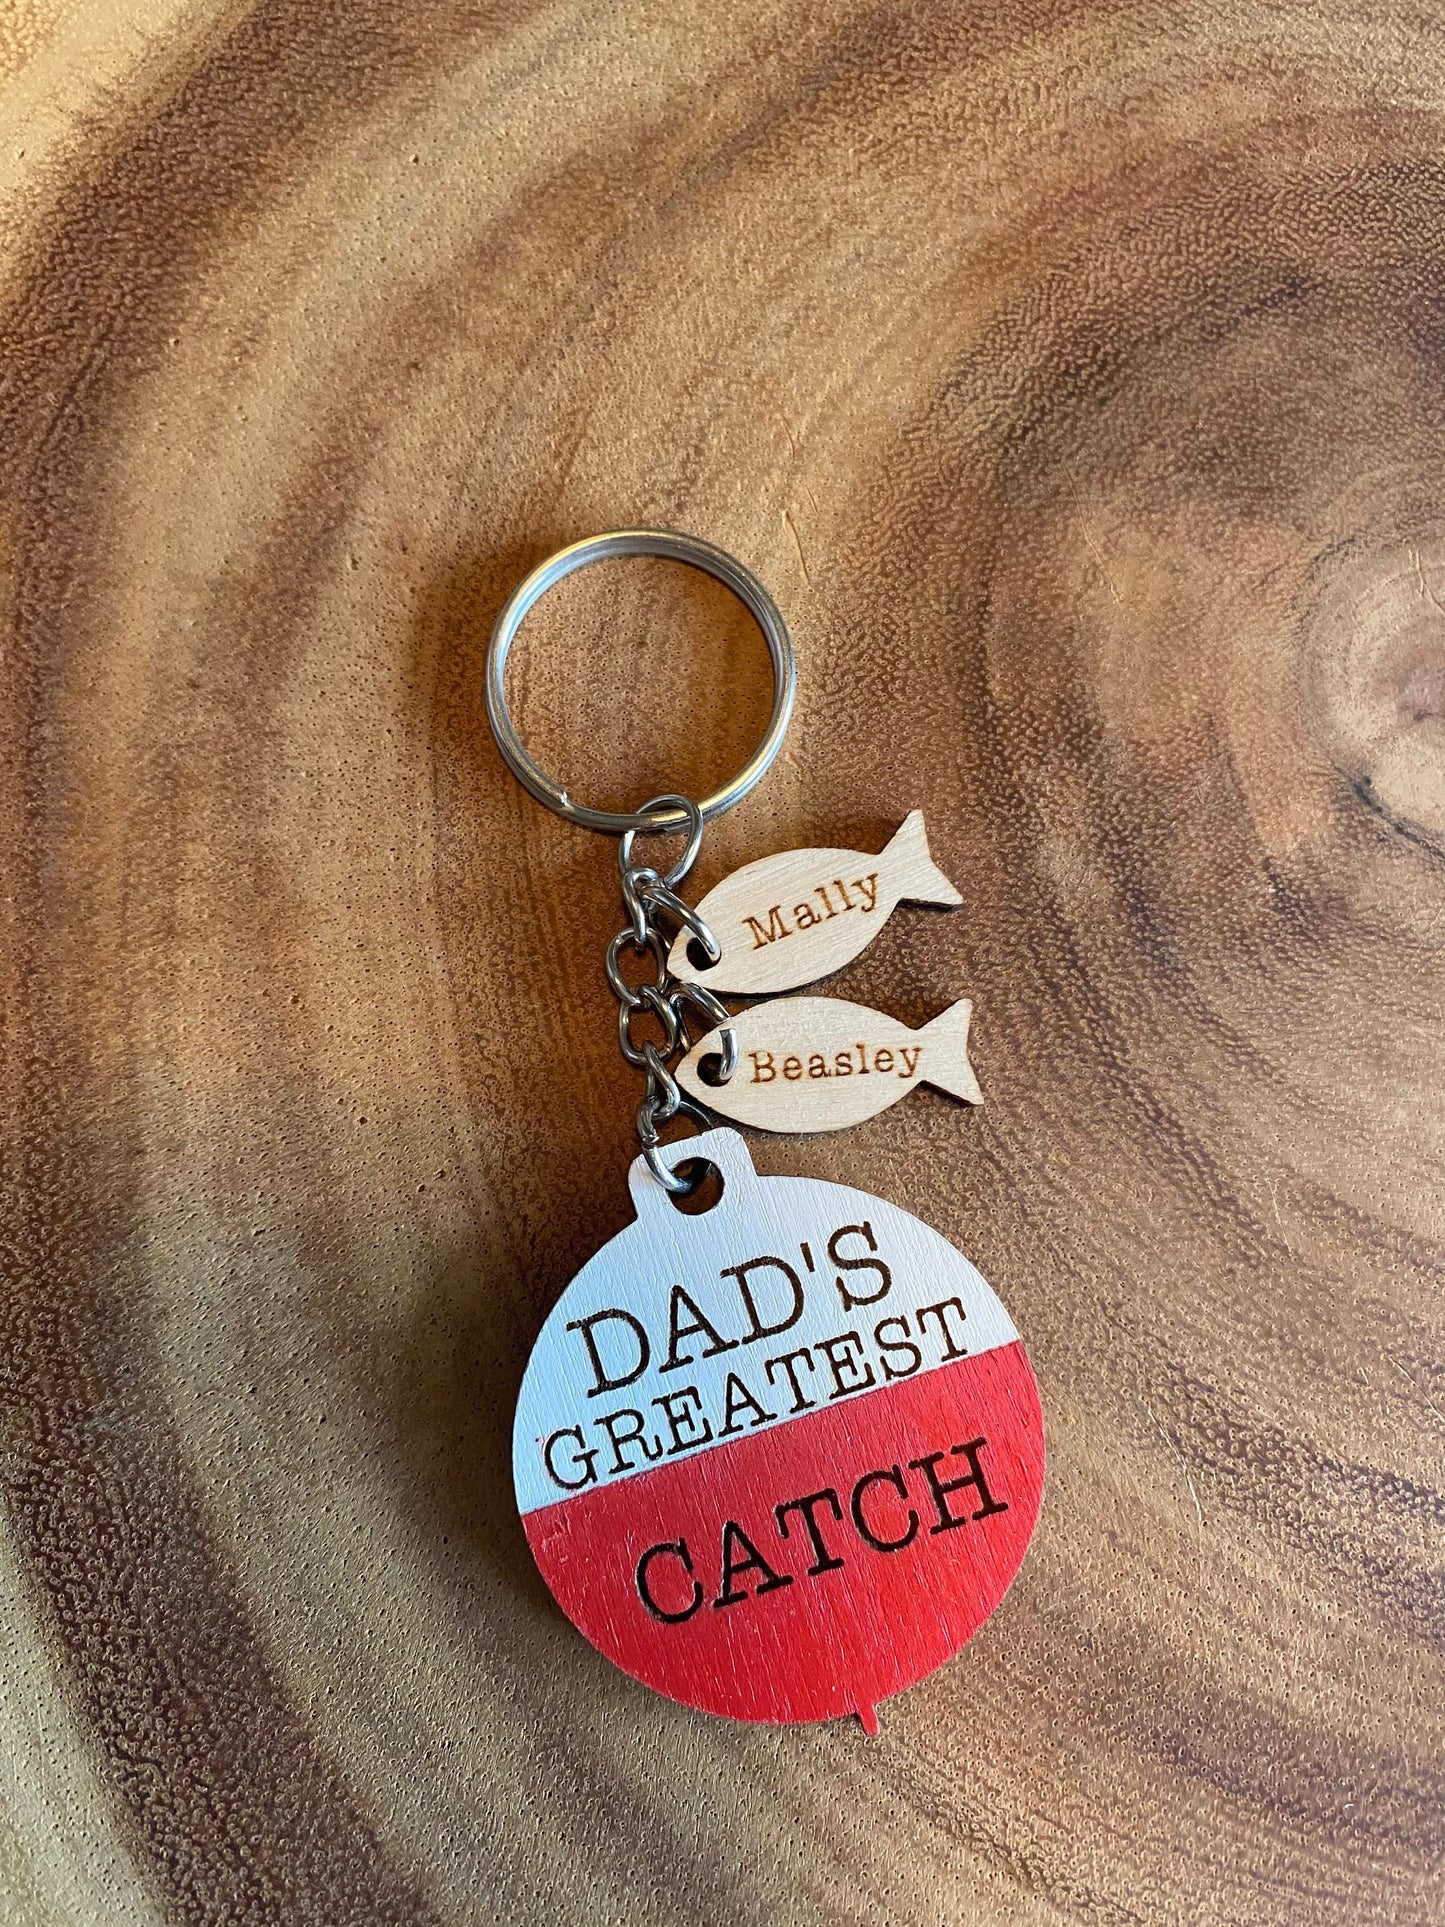 Personalized Fishing Bobber keychain | Greatest Catch